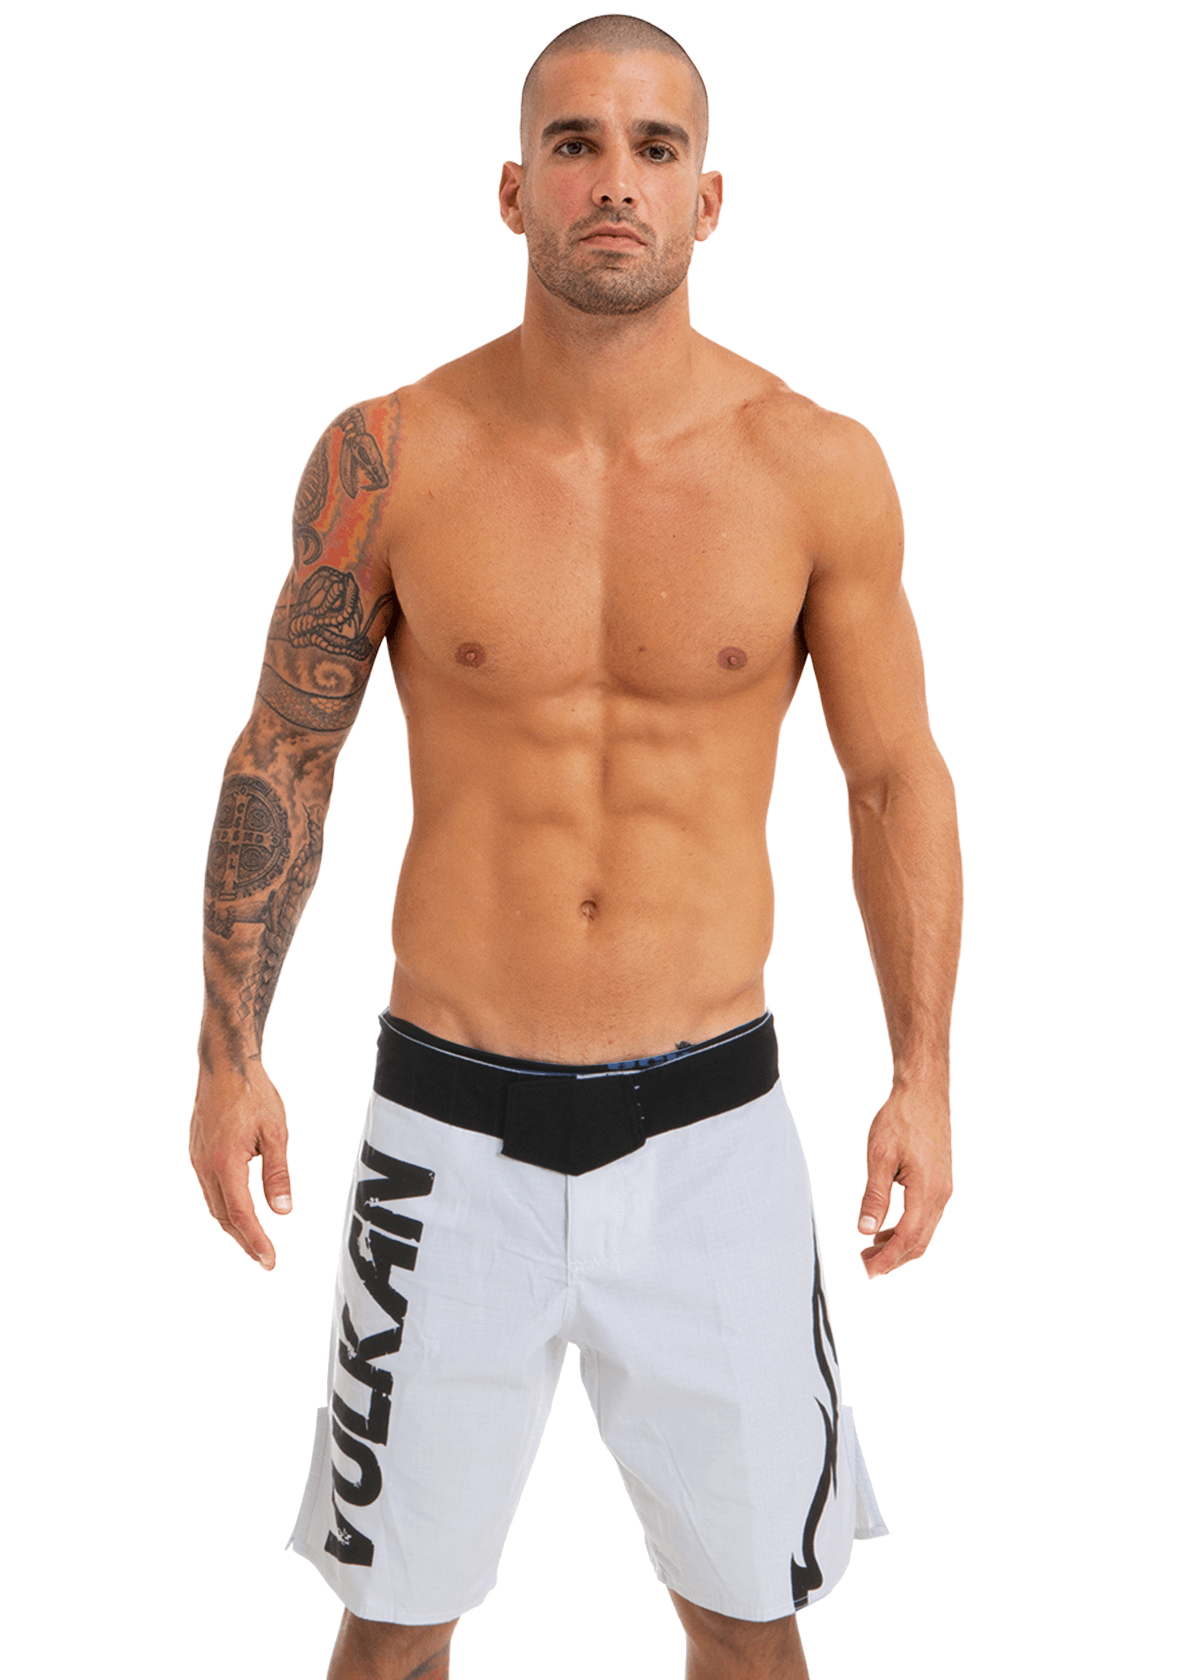 VT-X MMA Fight Shorts White/Flame - Vulkan International Inc